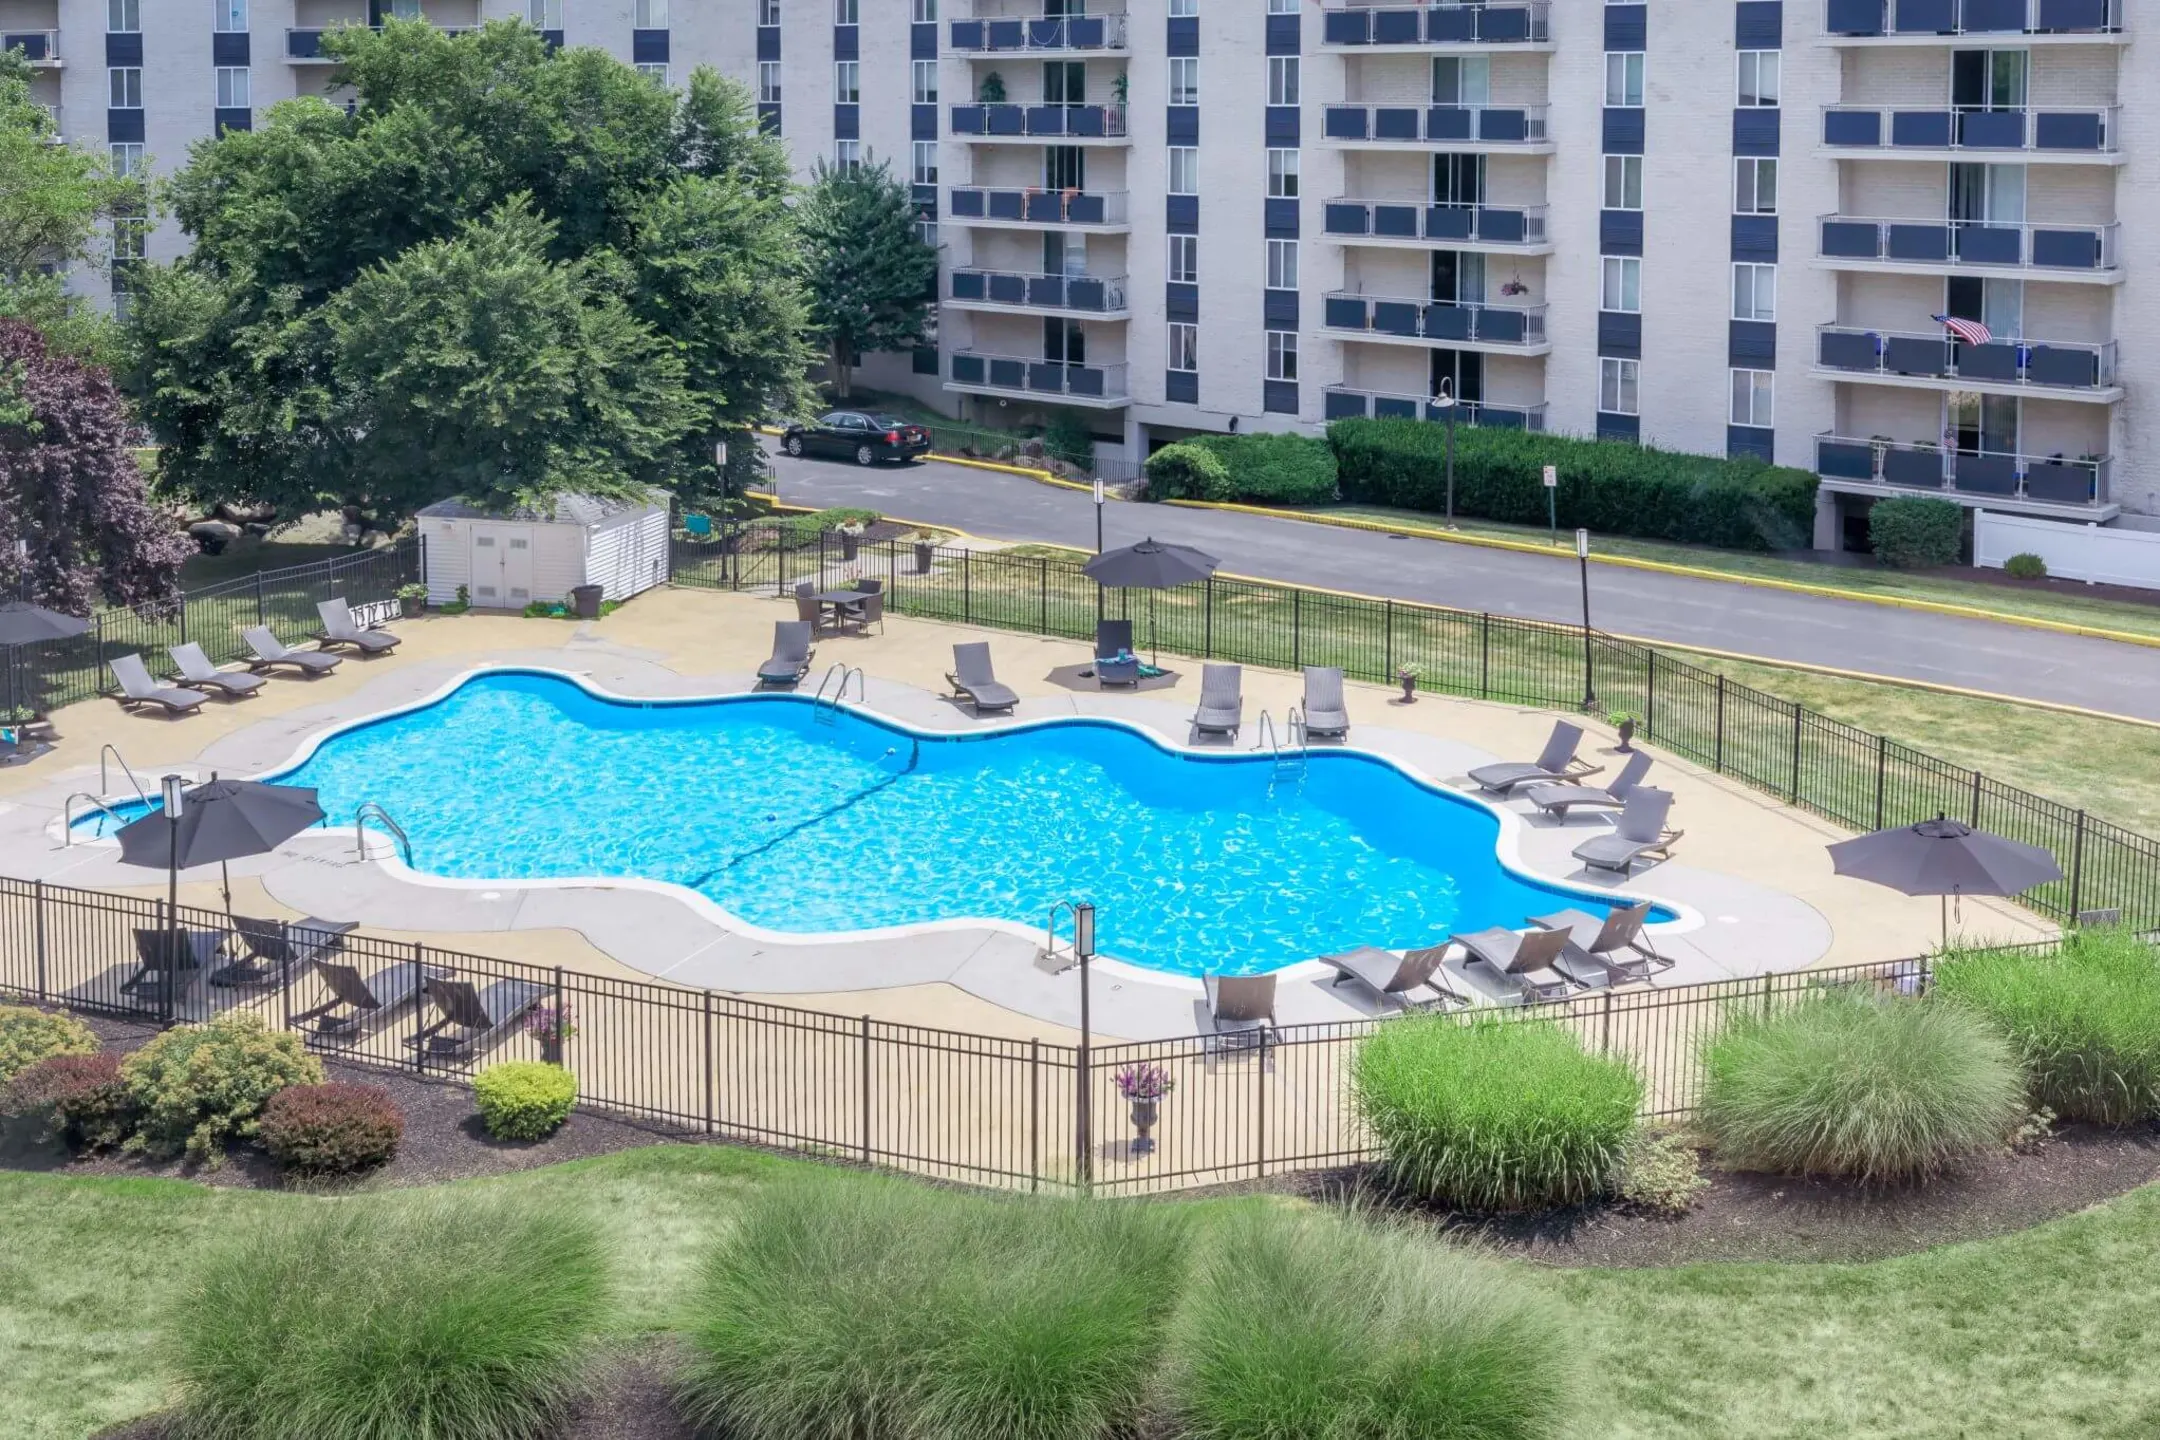 Pool - Brandywine Hundred Apartments - Wilmington, DE